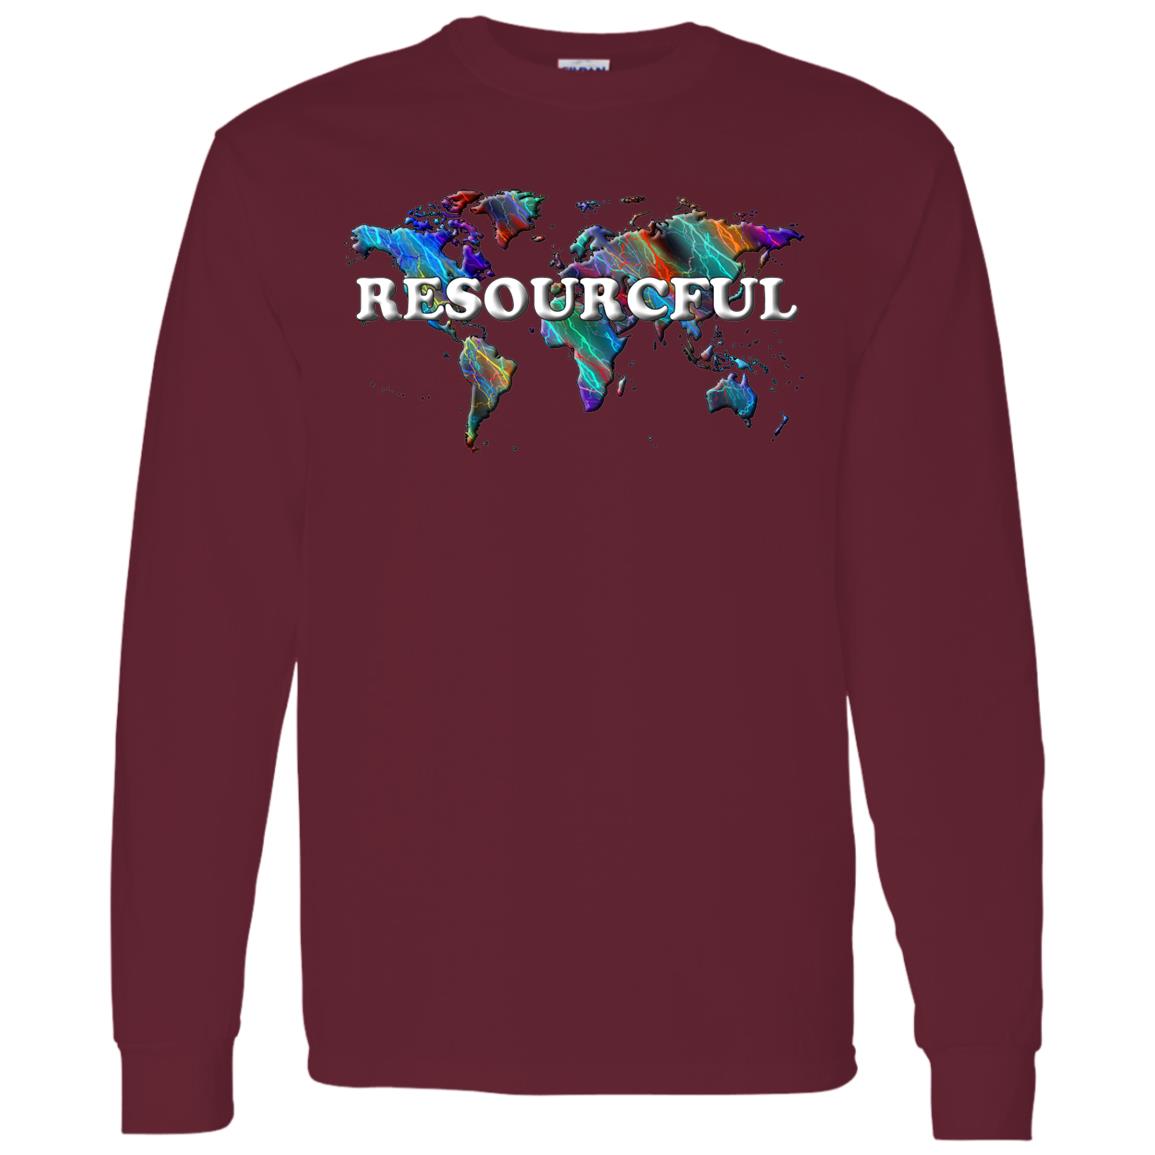 Resourceful LS T-Shirt